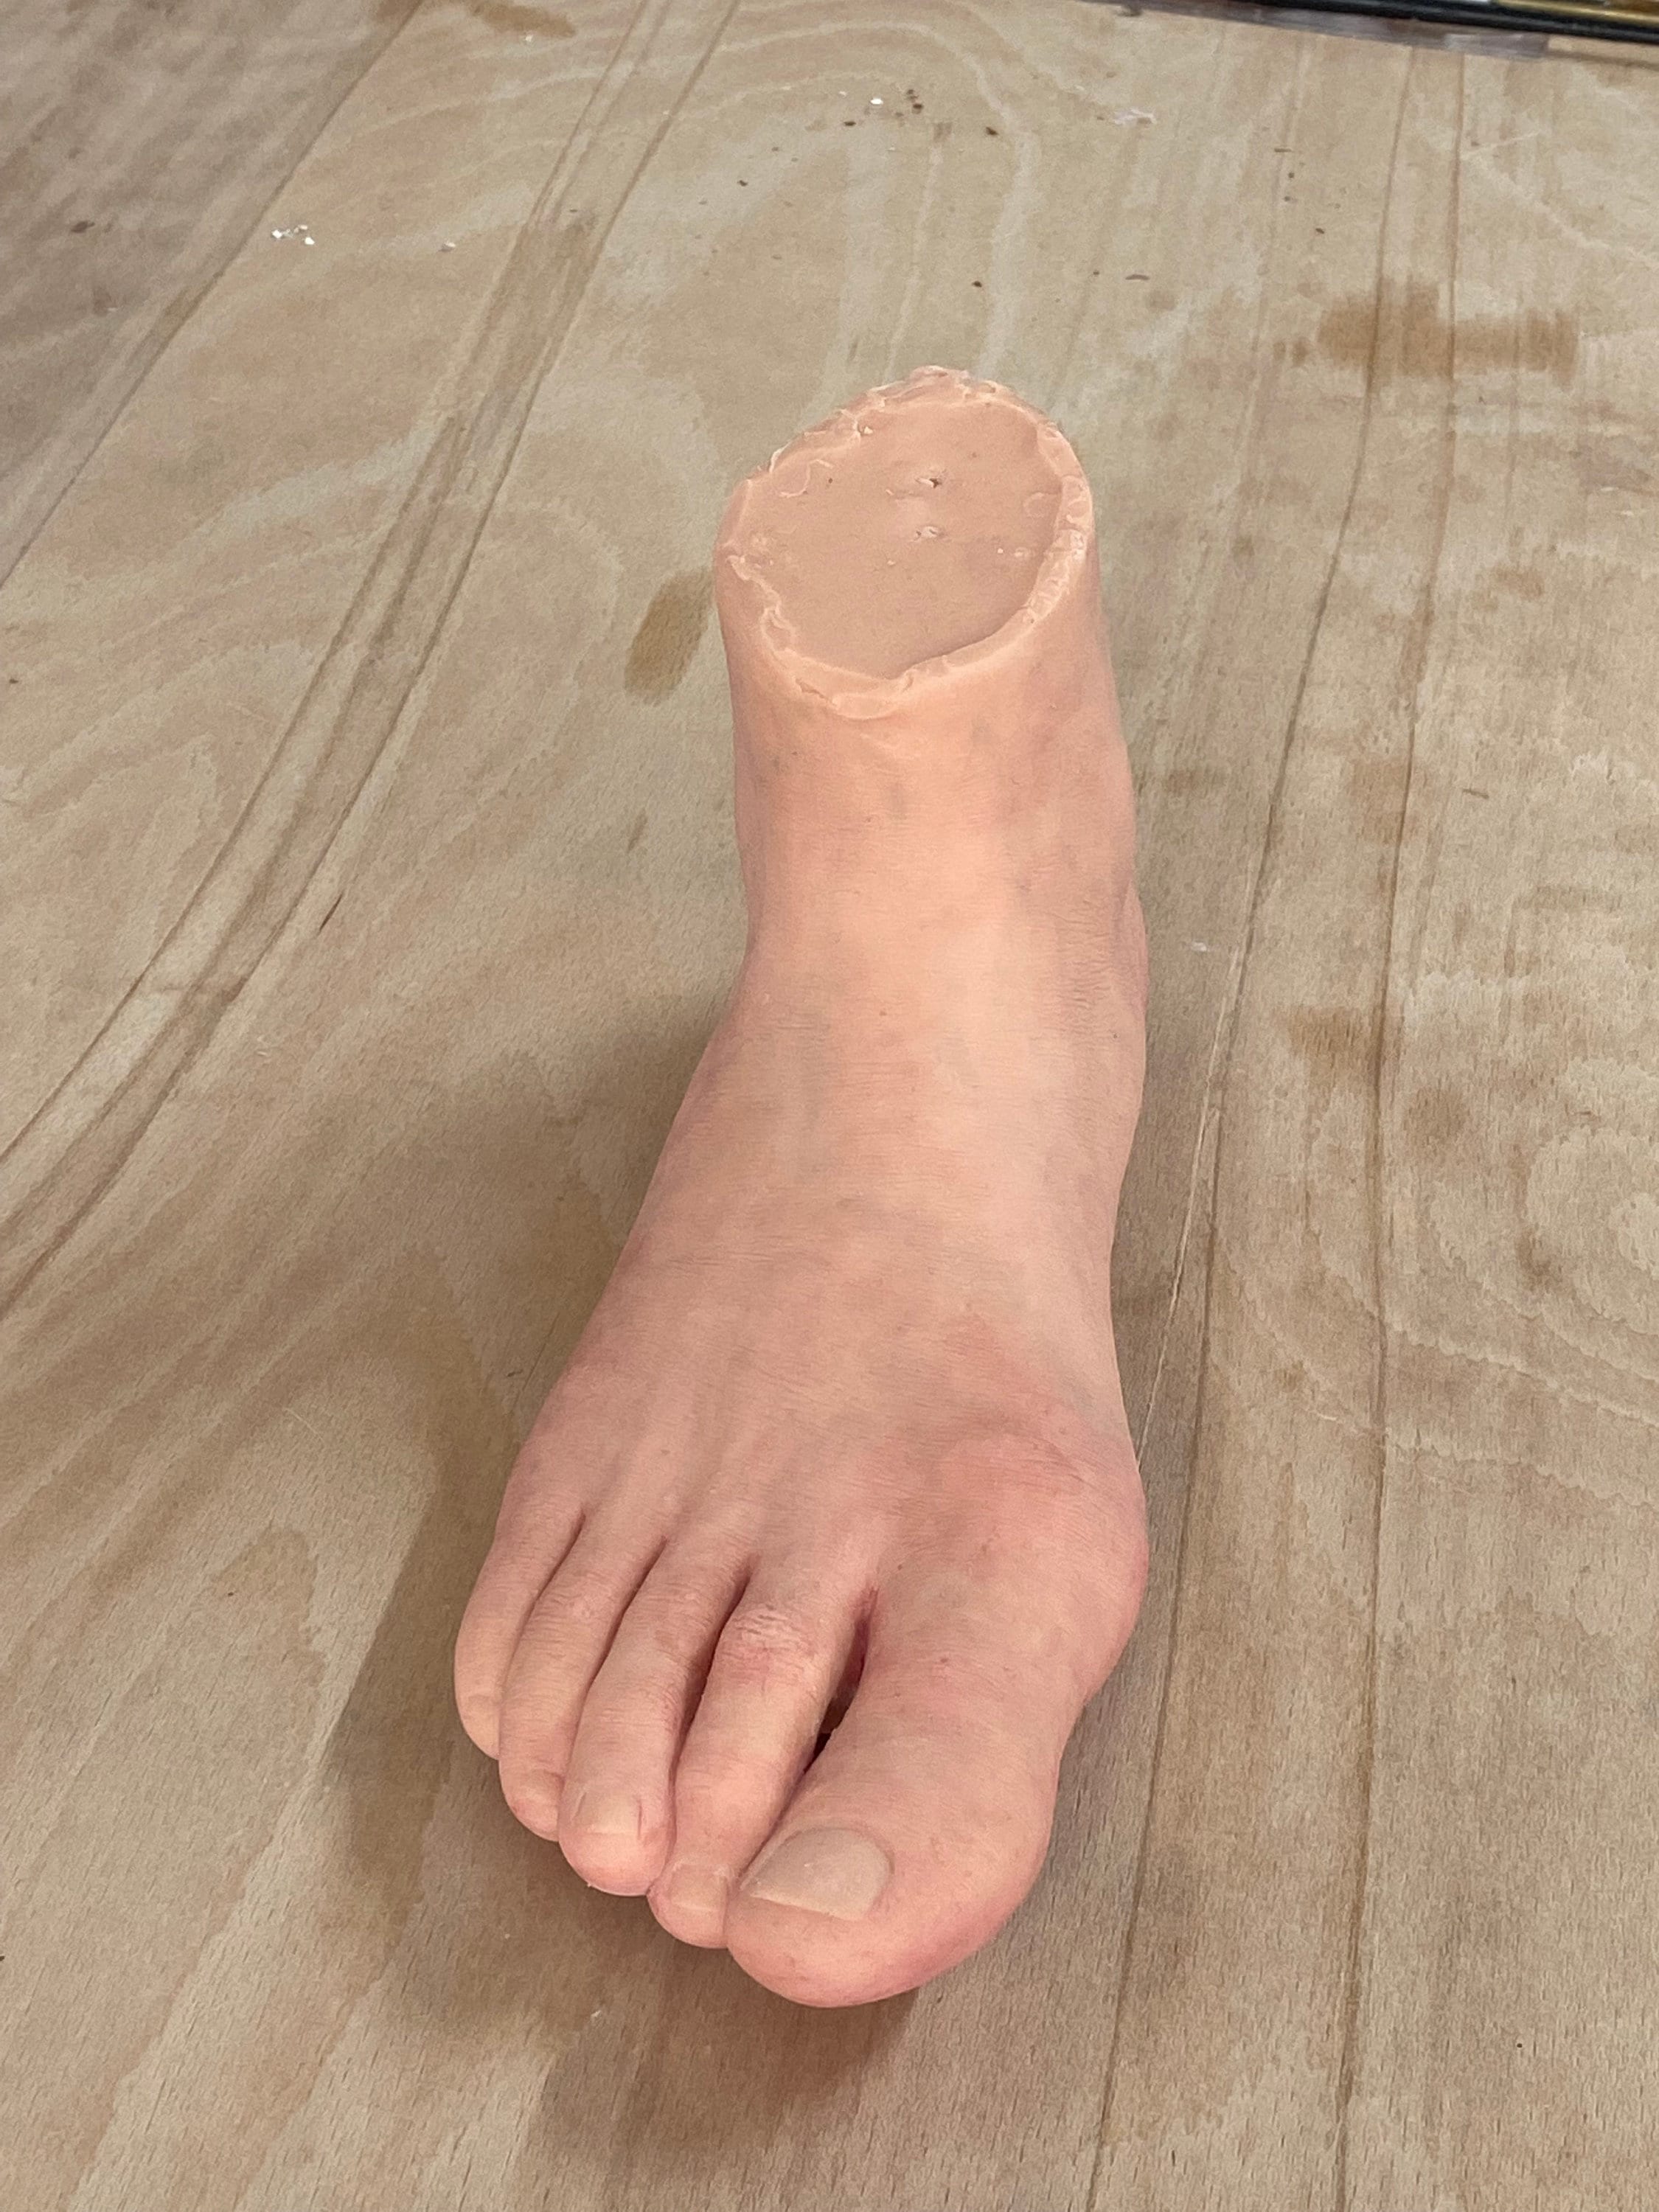 Just Sculpt Silicone Feet With Calf Bone Female Pair - The